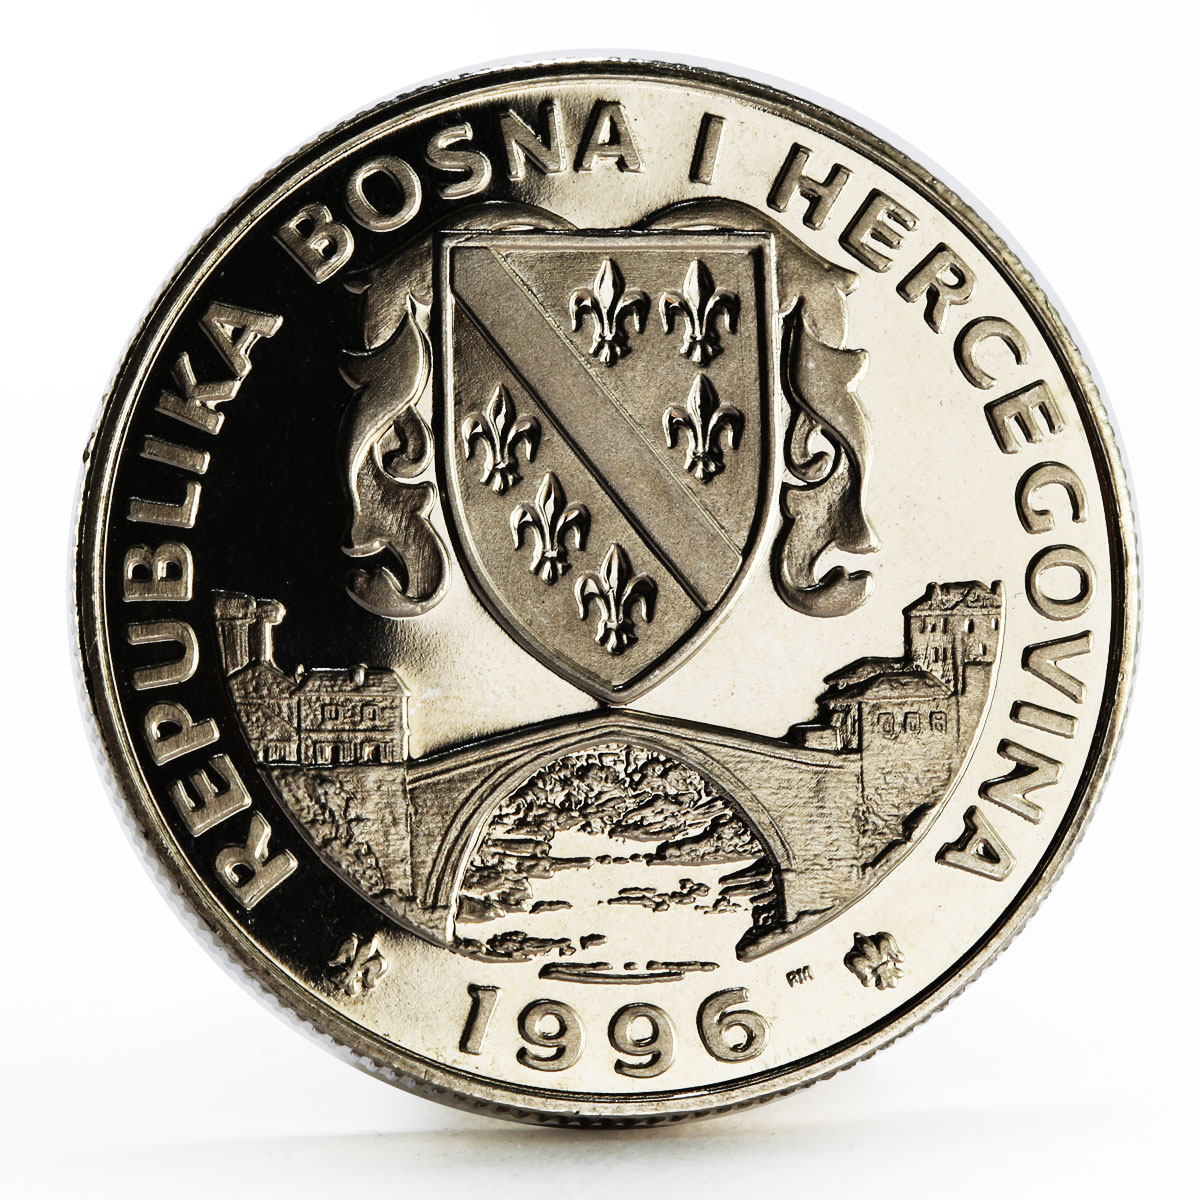 Bosnia and Herzegovina 500 dinara Atlanta Olympics Long Jumper nickel coin 1996